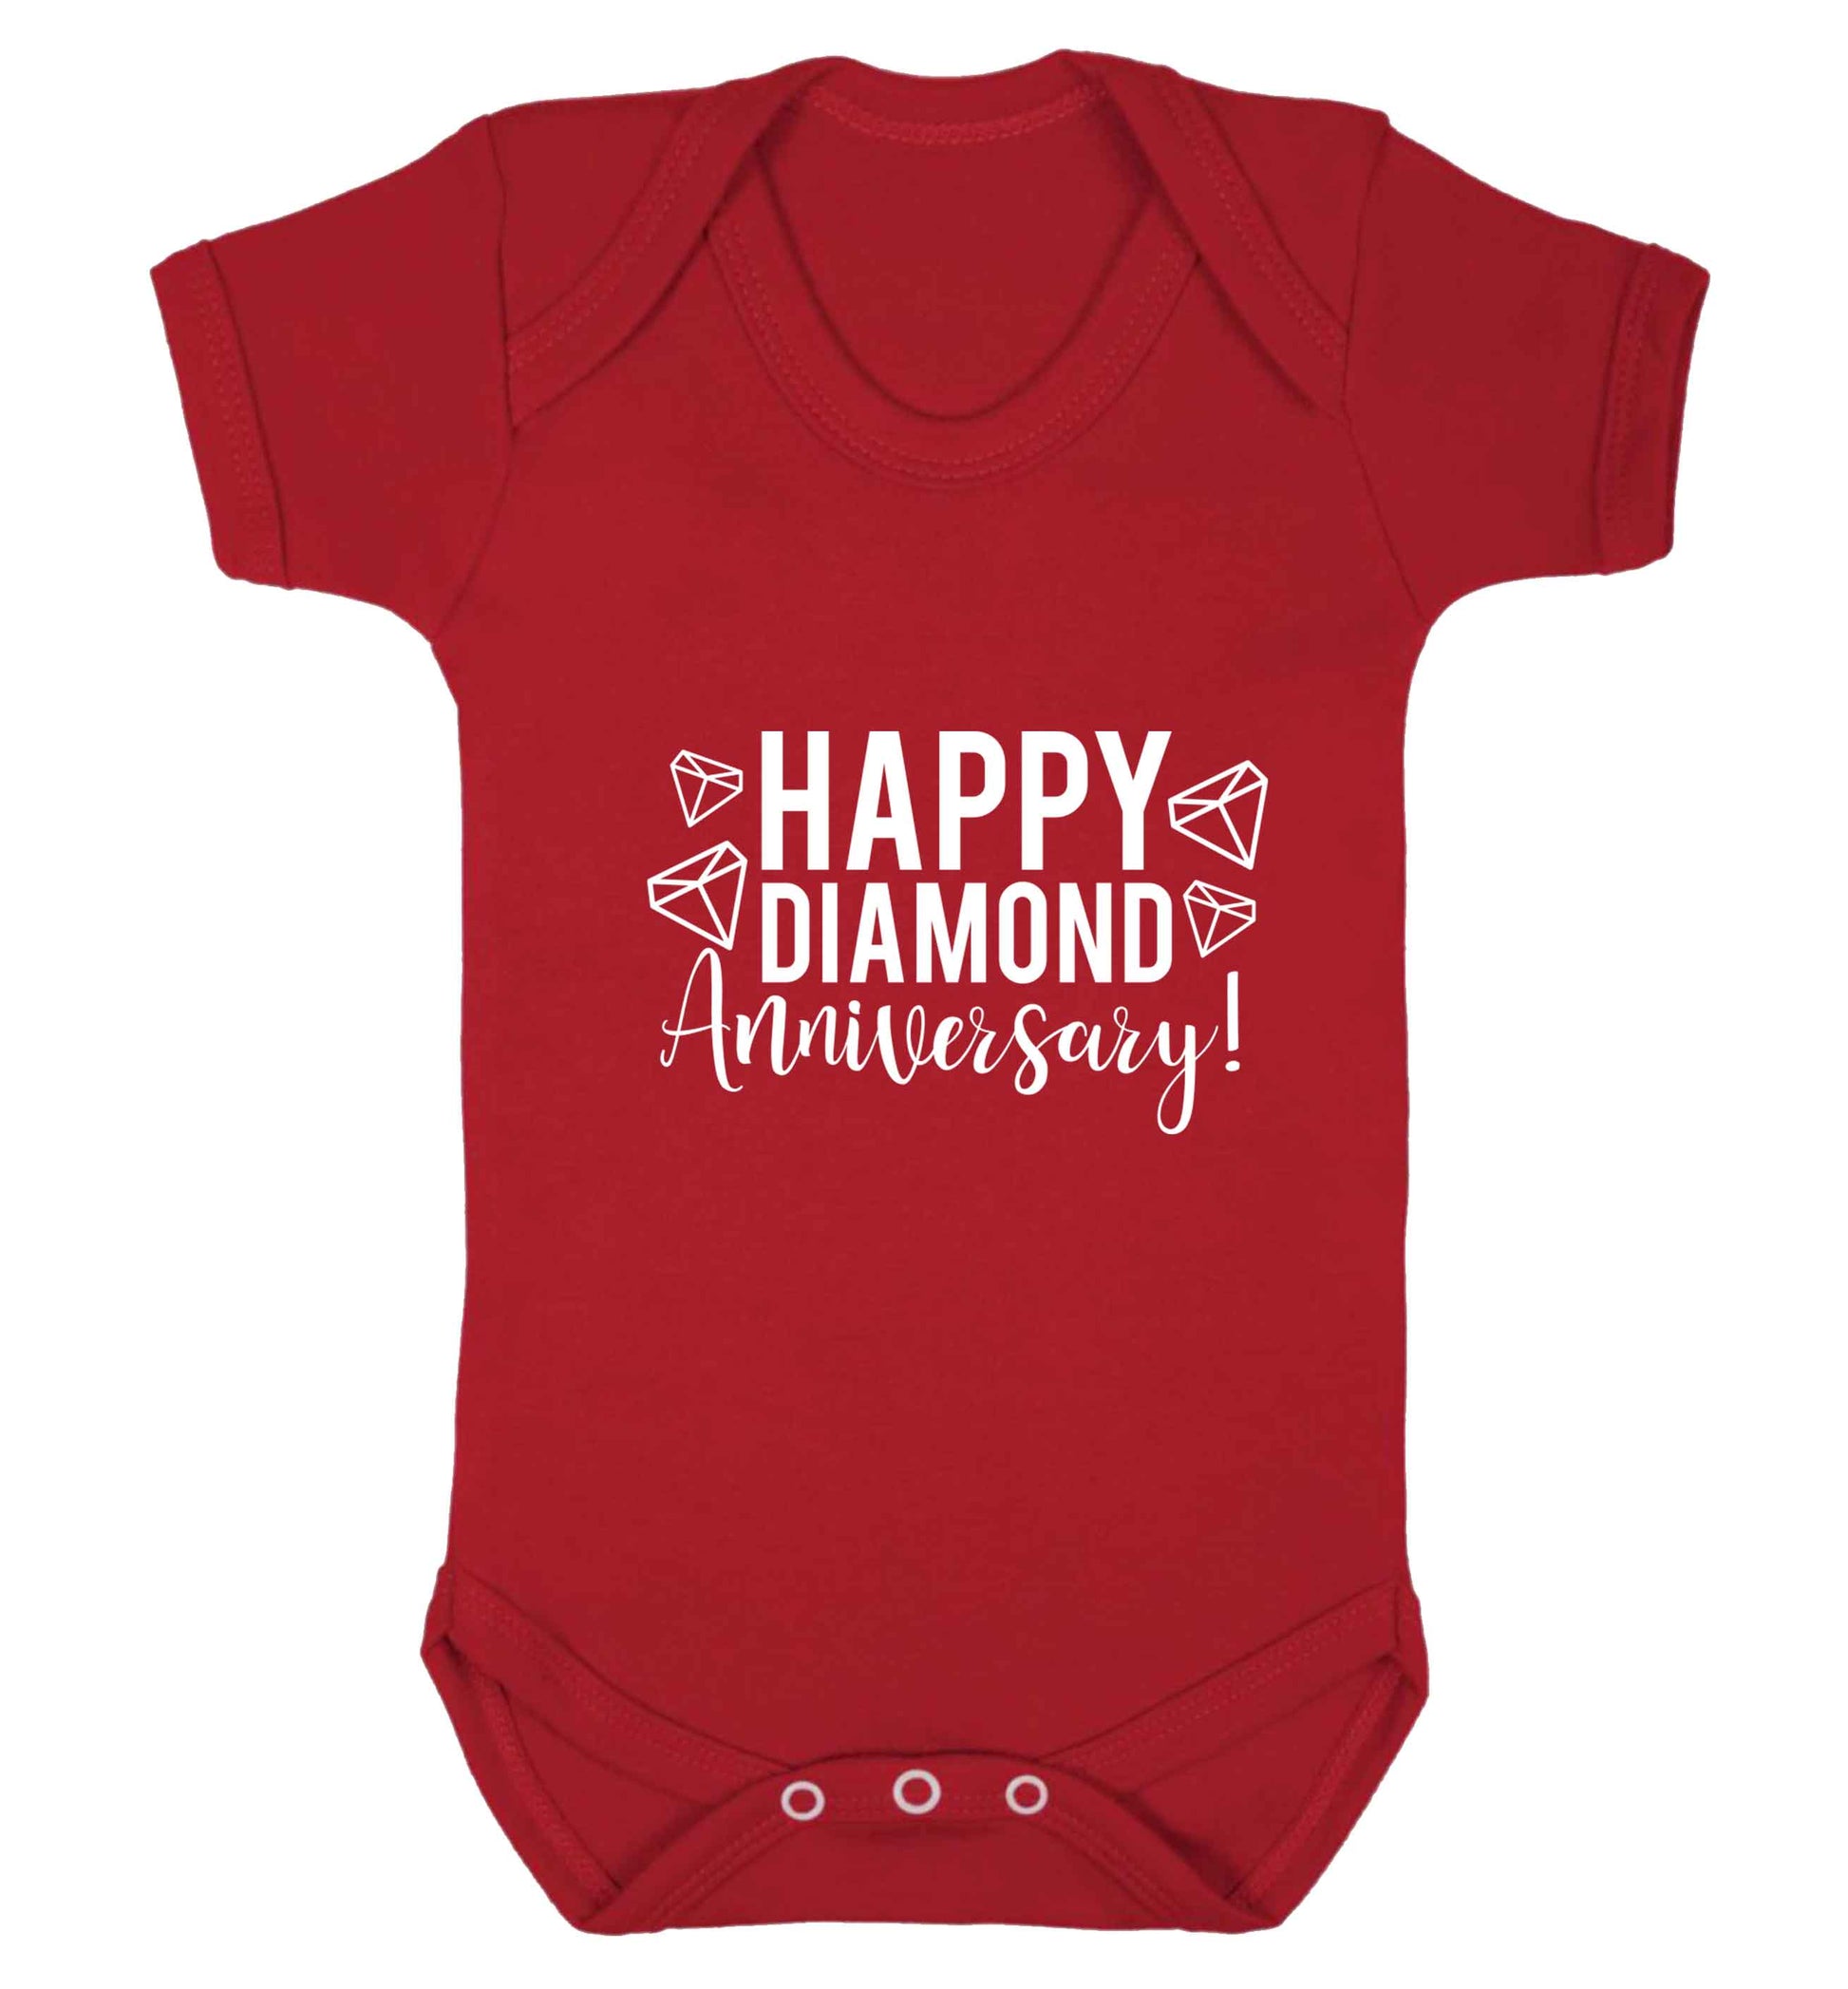 Happy diamond anniversary! baby vest red 18-24 months